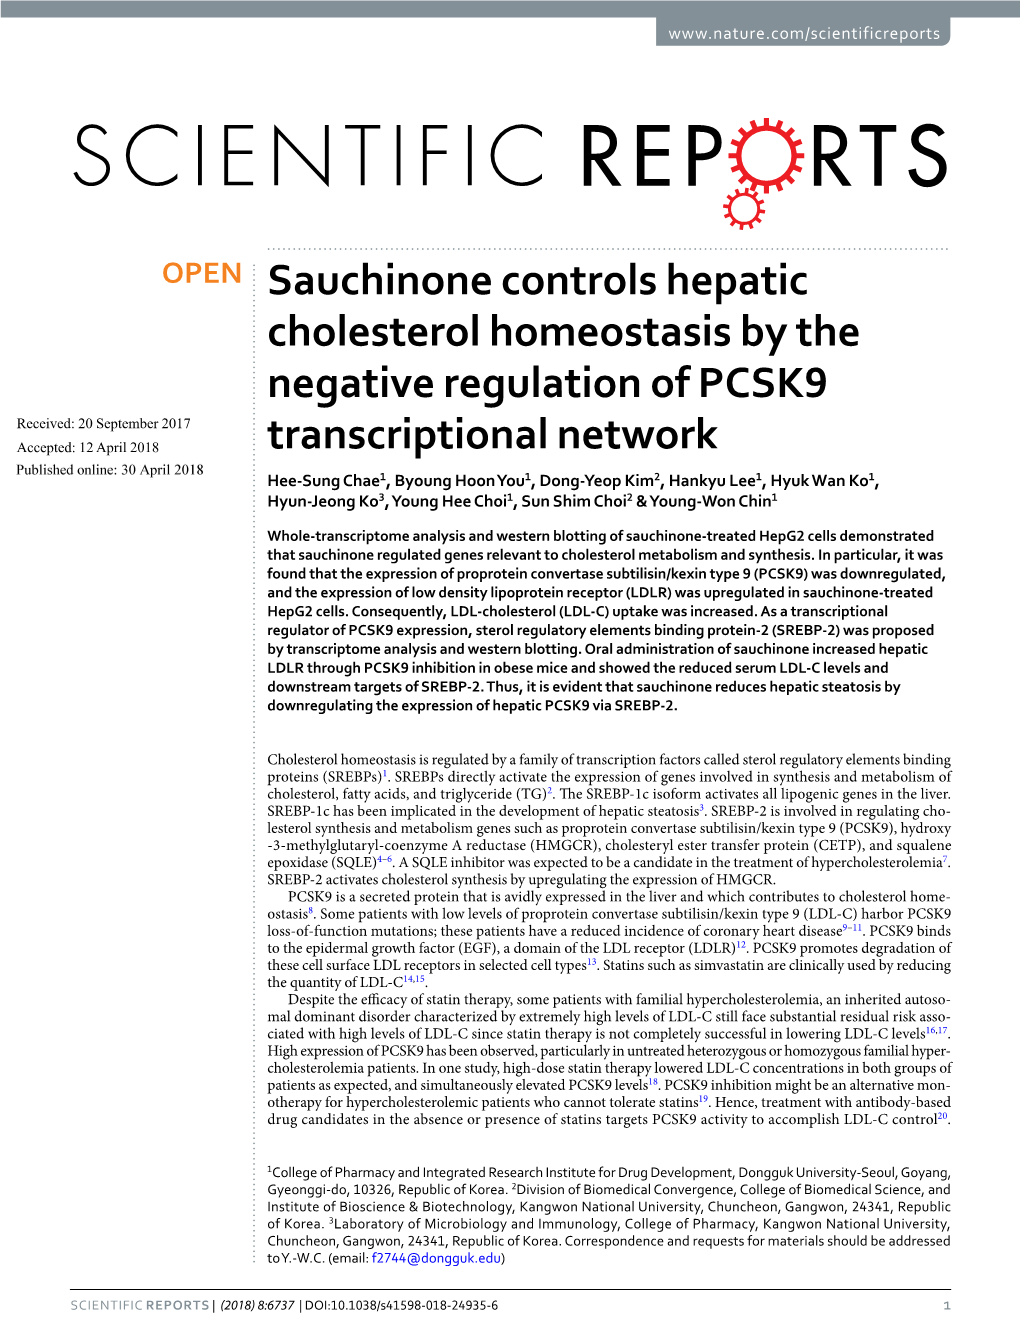 Sauchinone Controls Hepatic Cholesterol Homeostasis by The